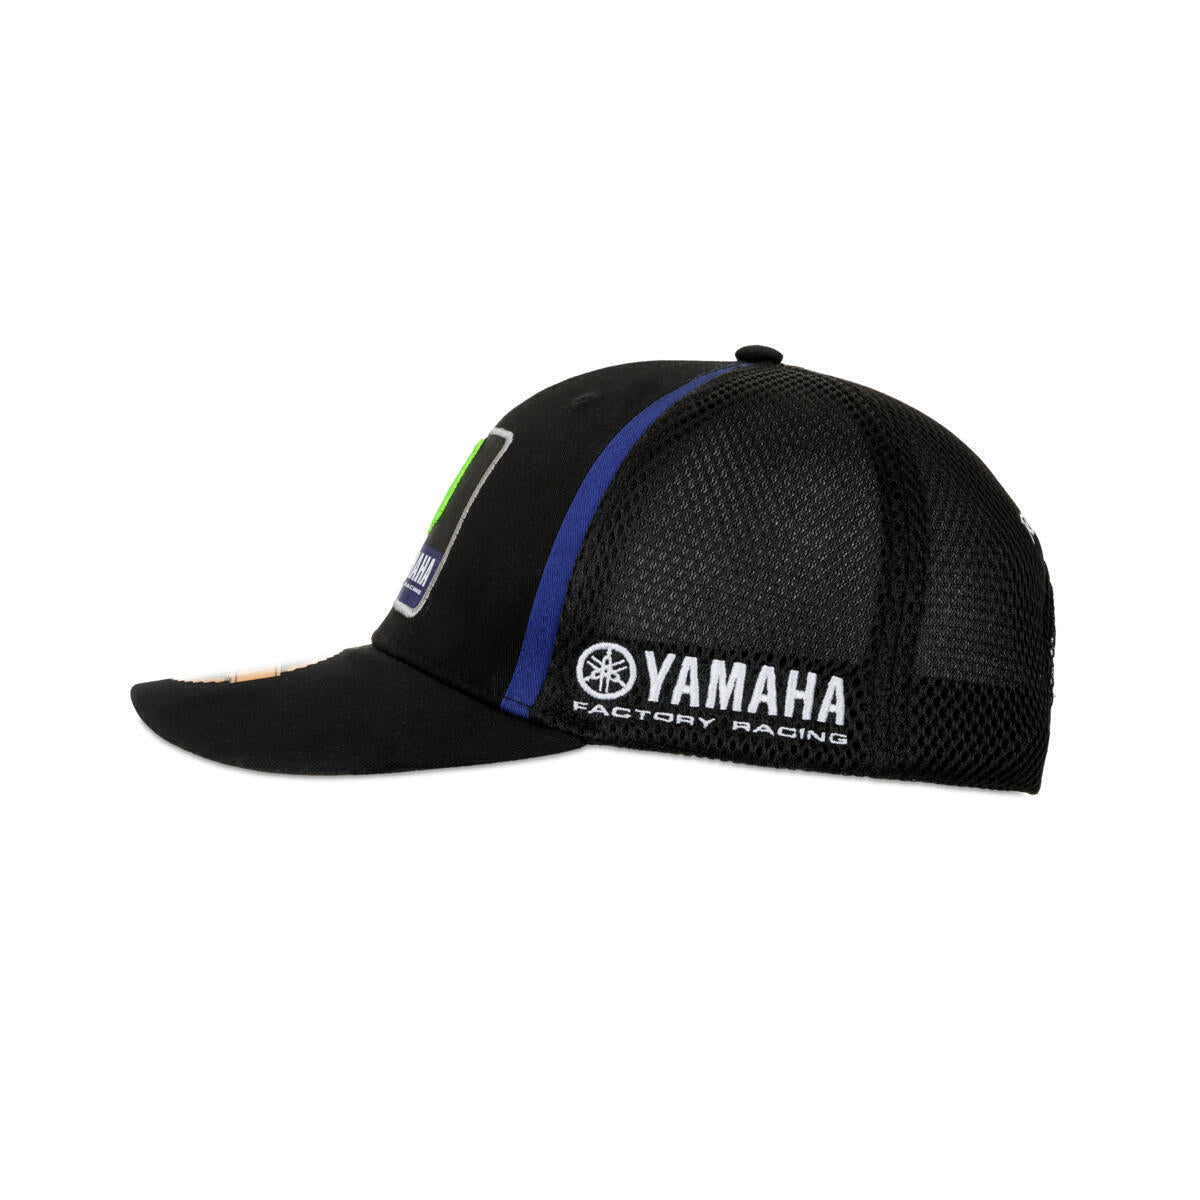 Official Factory Yamaha Baseball Cap - Ytmca 444704